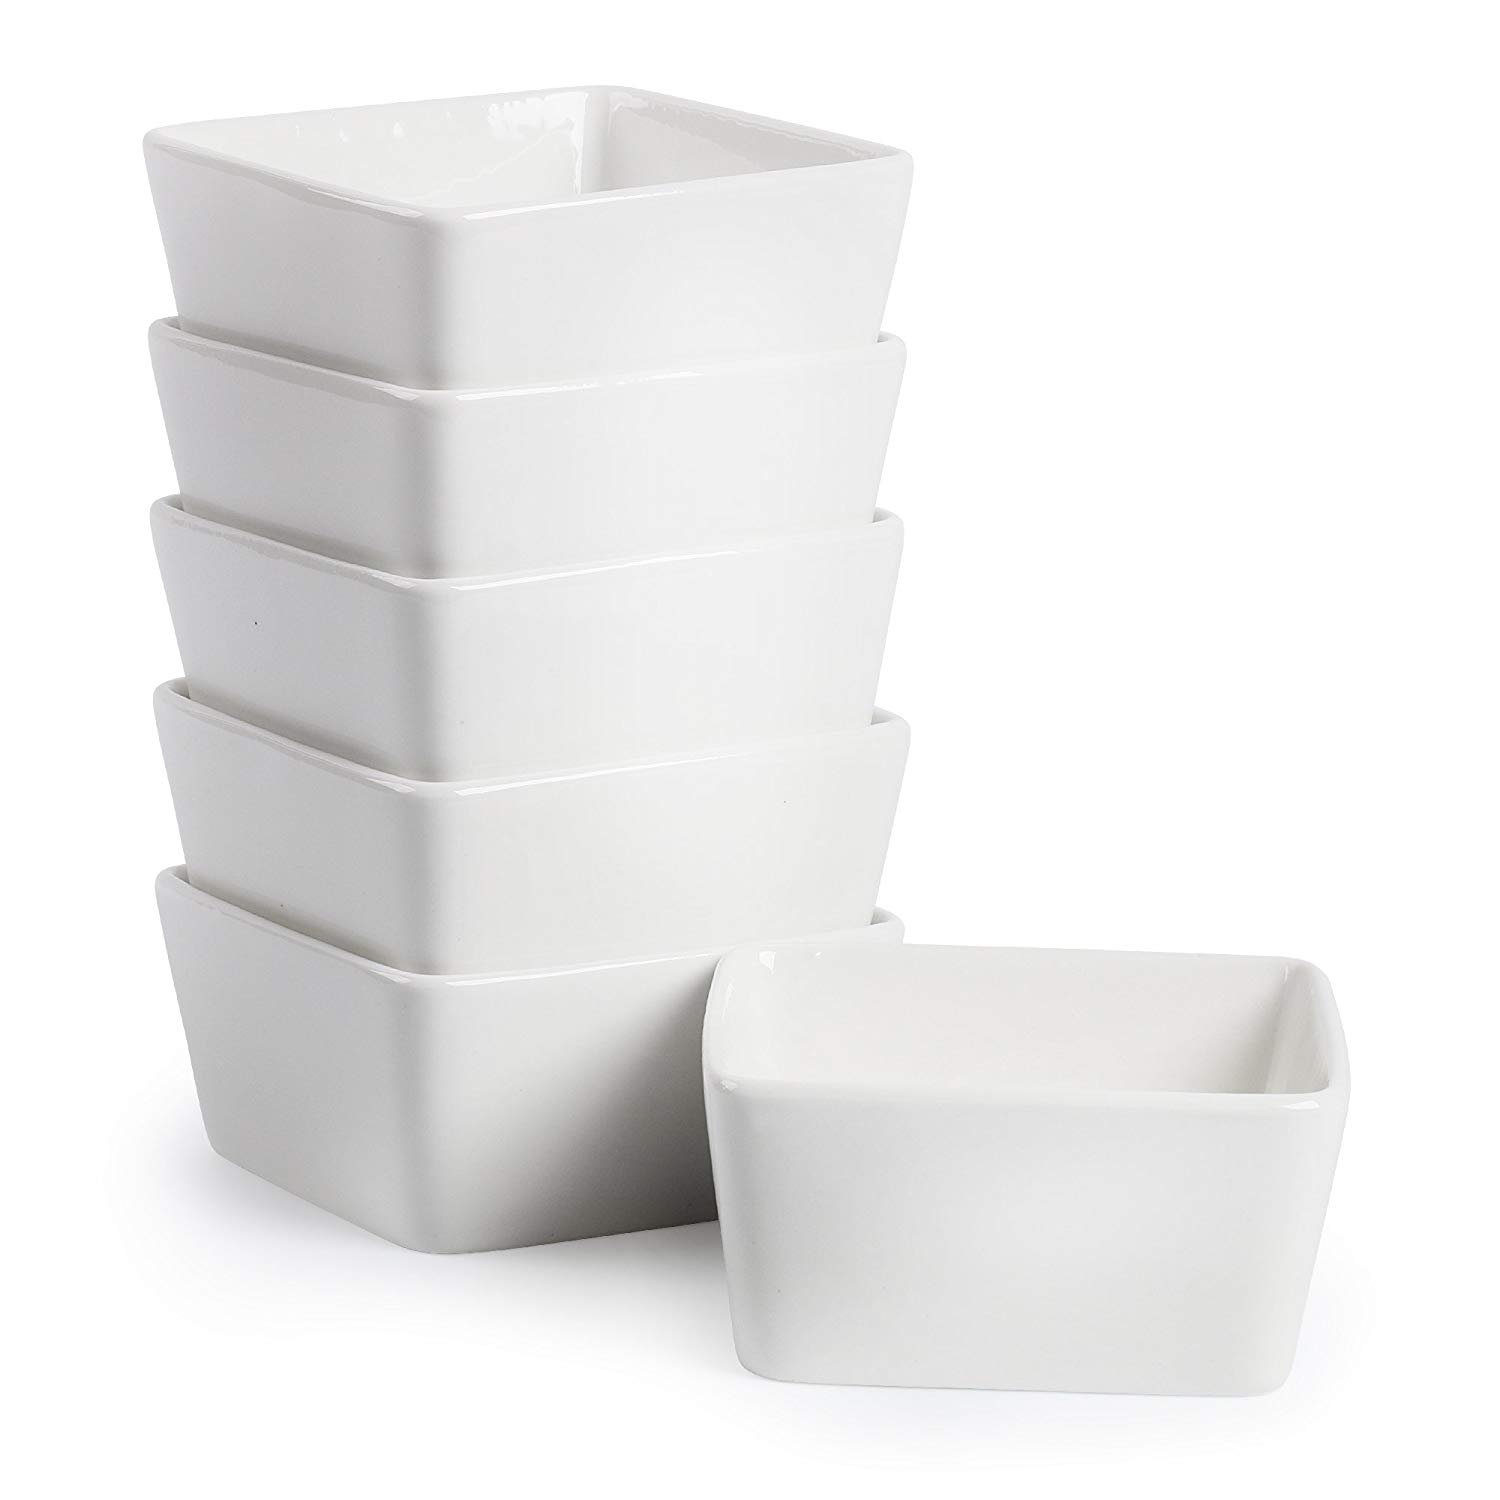 Set 6 White Porcelain 5oz Individual Dessert Oven-to-Table Ramekin Dishes 